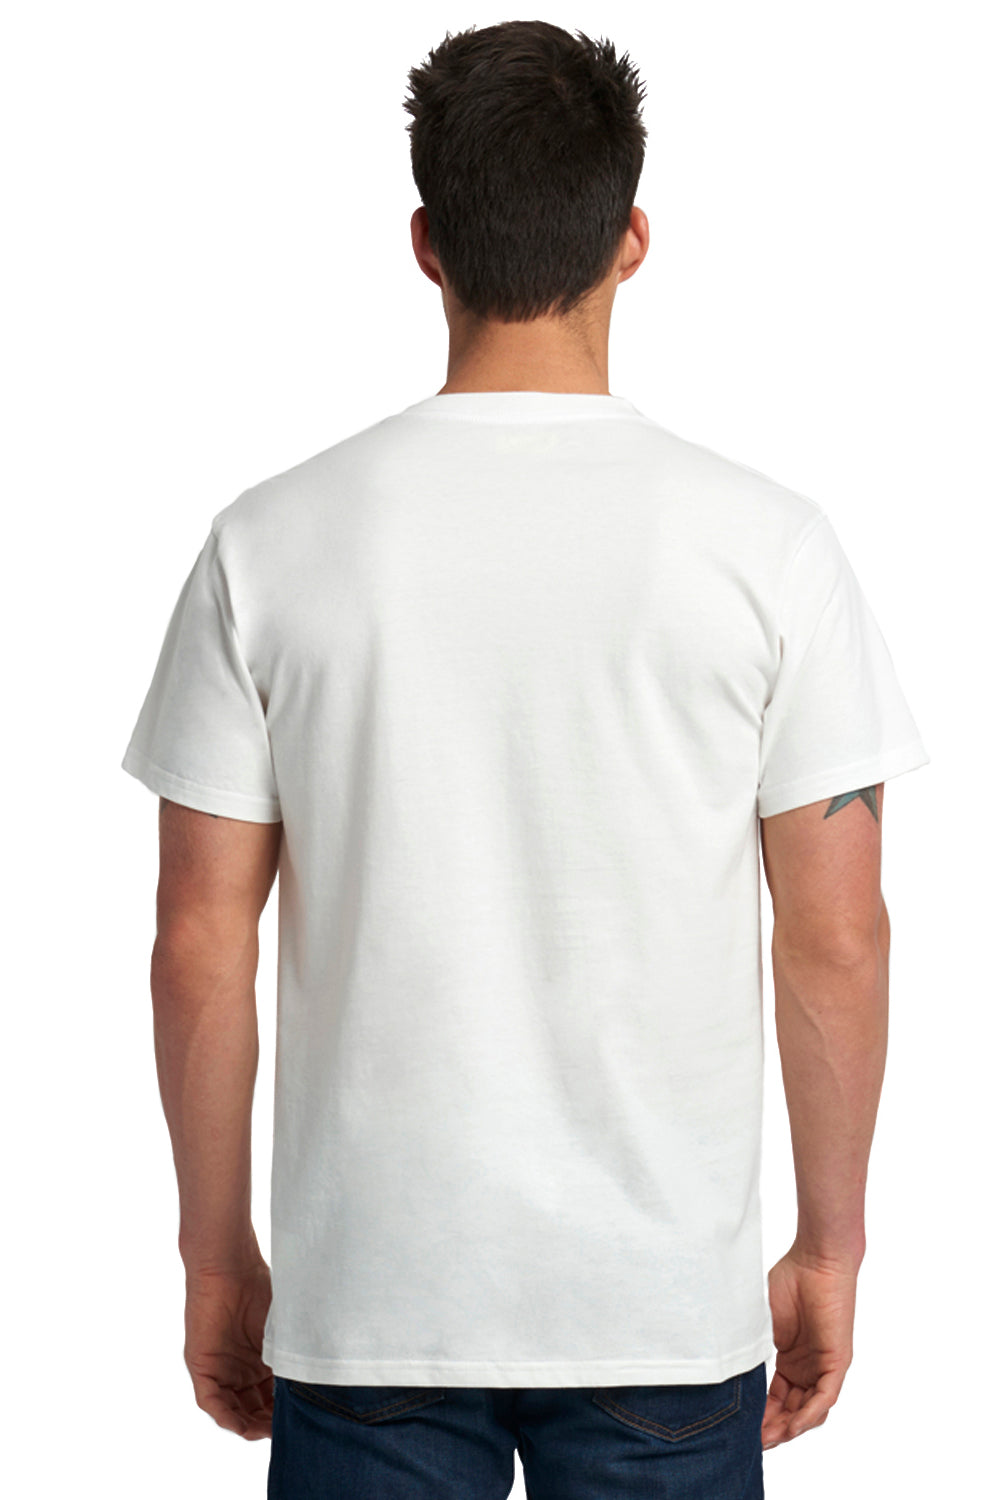 Next Level 7410 Mens Inspired Dye Jersey Short Sleeve Crewneck T-Shirt White Back